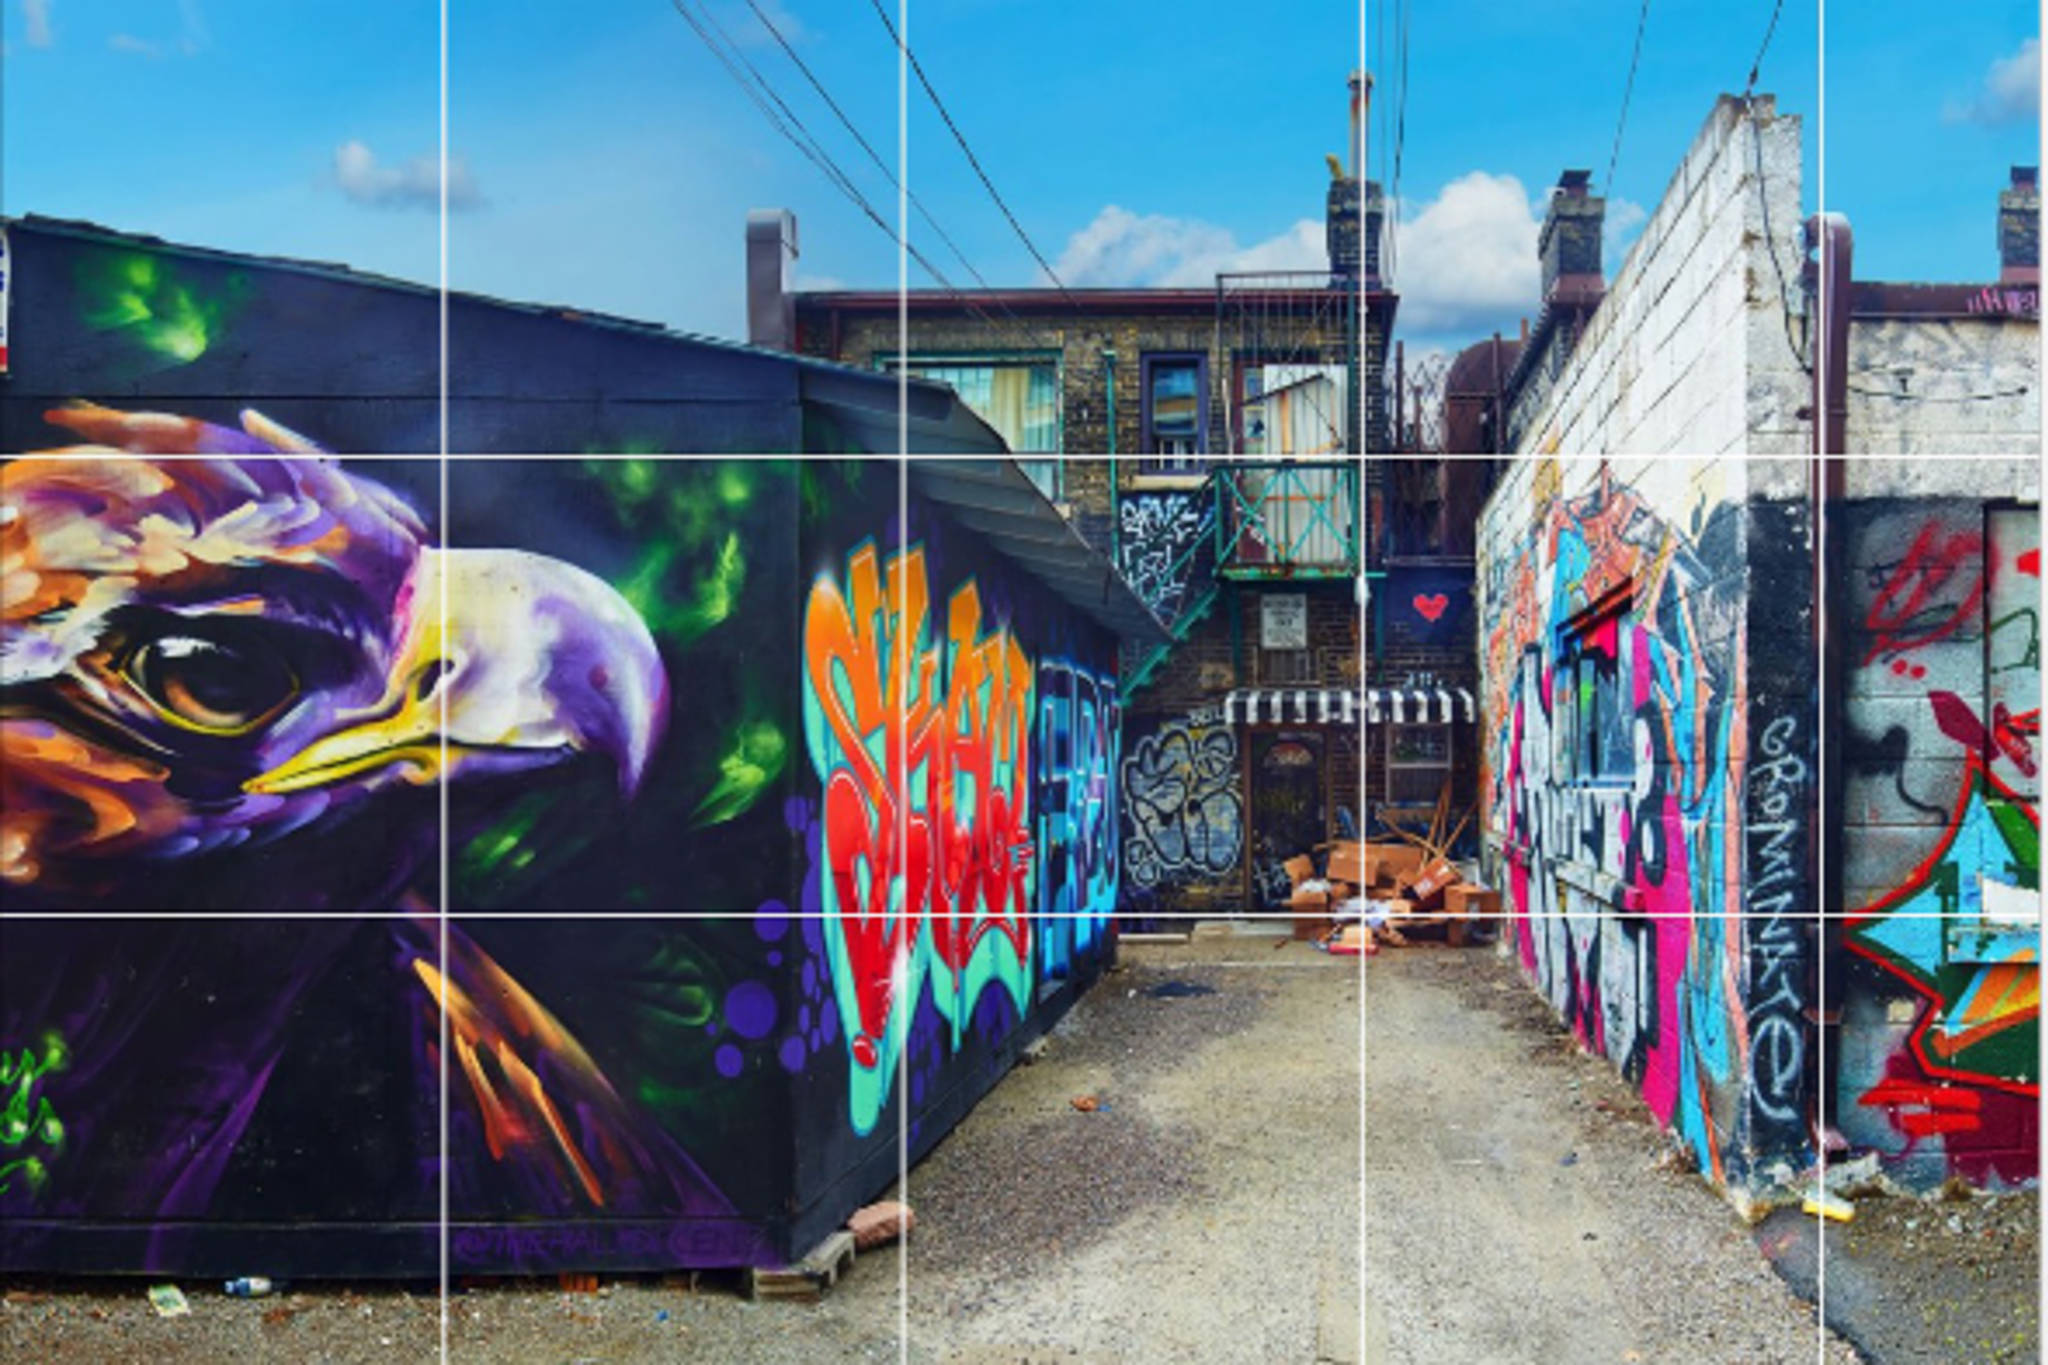 Graffiti Alley now has world's longest Instagram photo